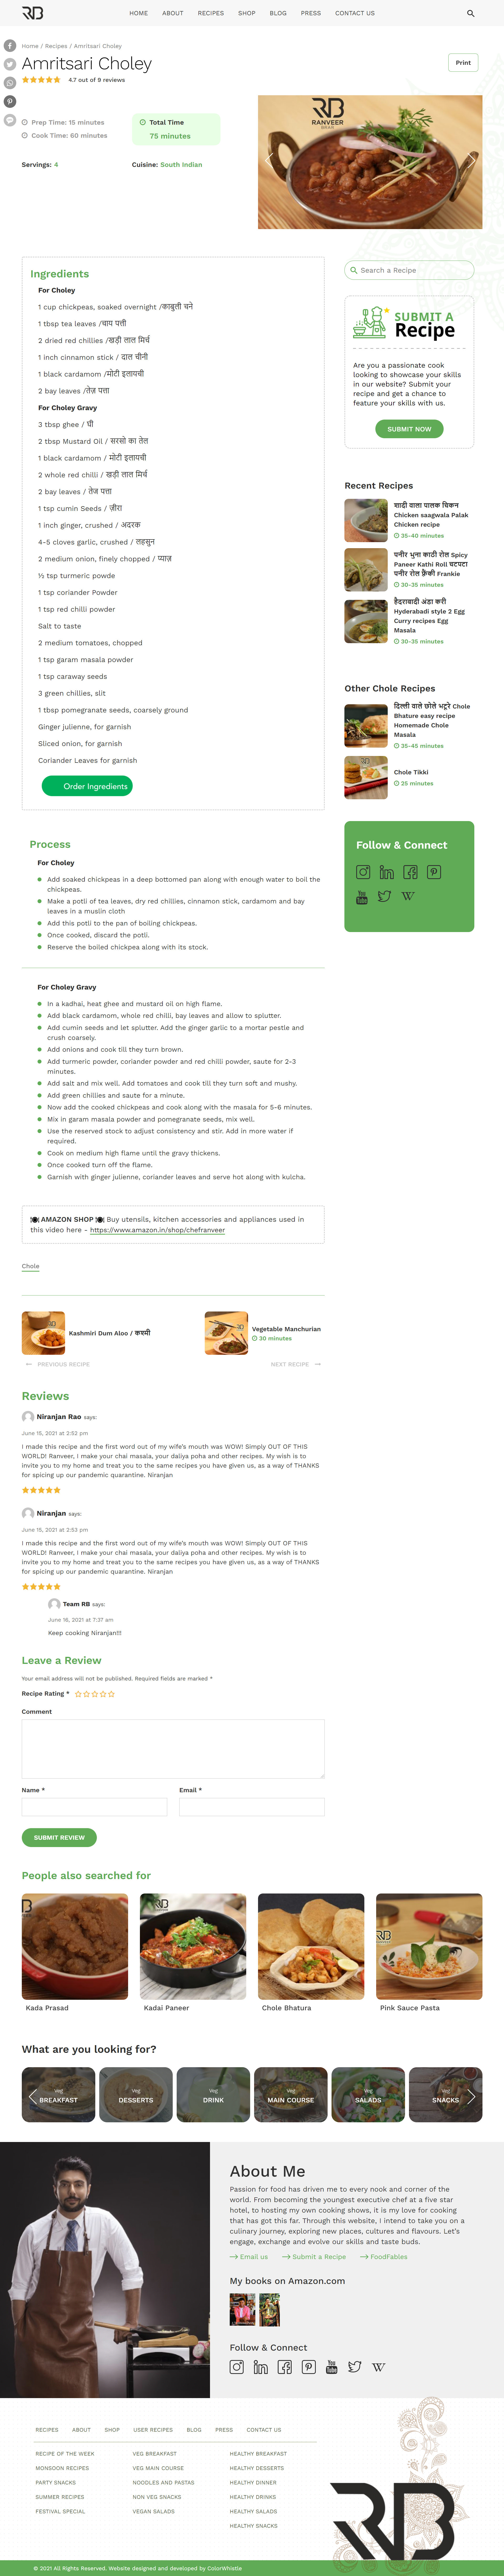 recipe detailed page - Celebrity Chef Website Design & Development Using WordPress